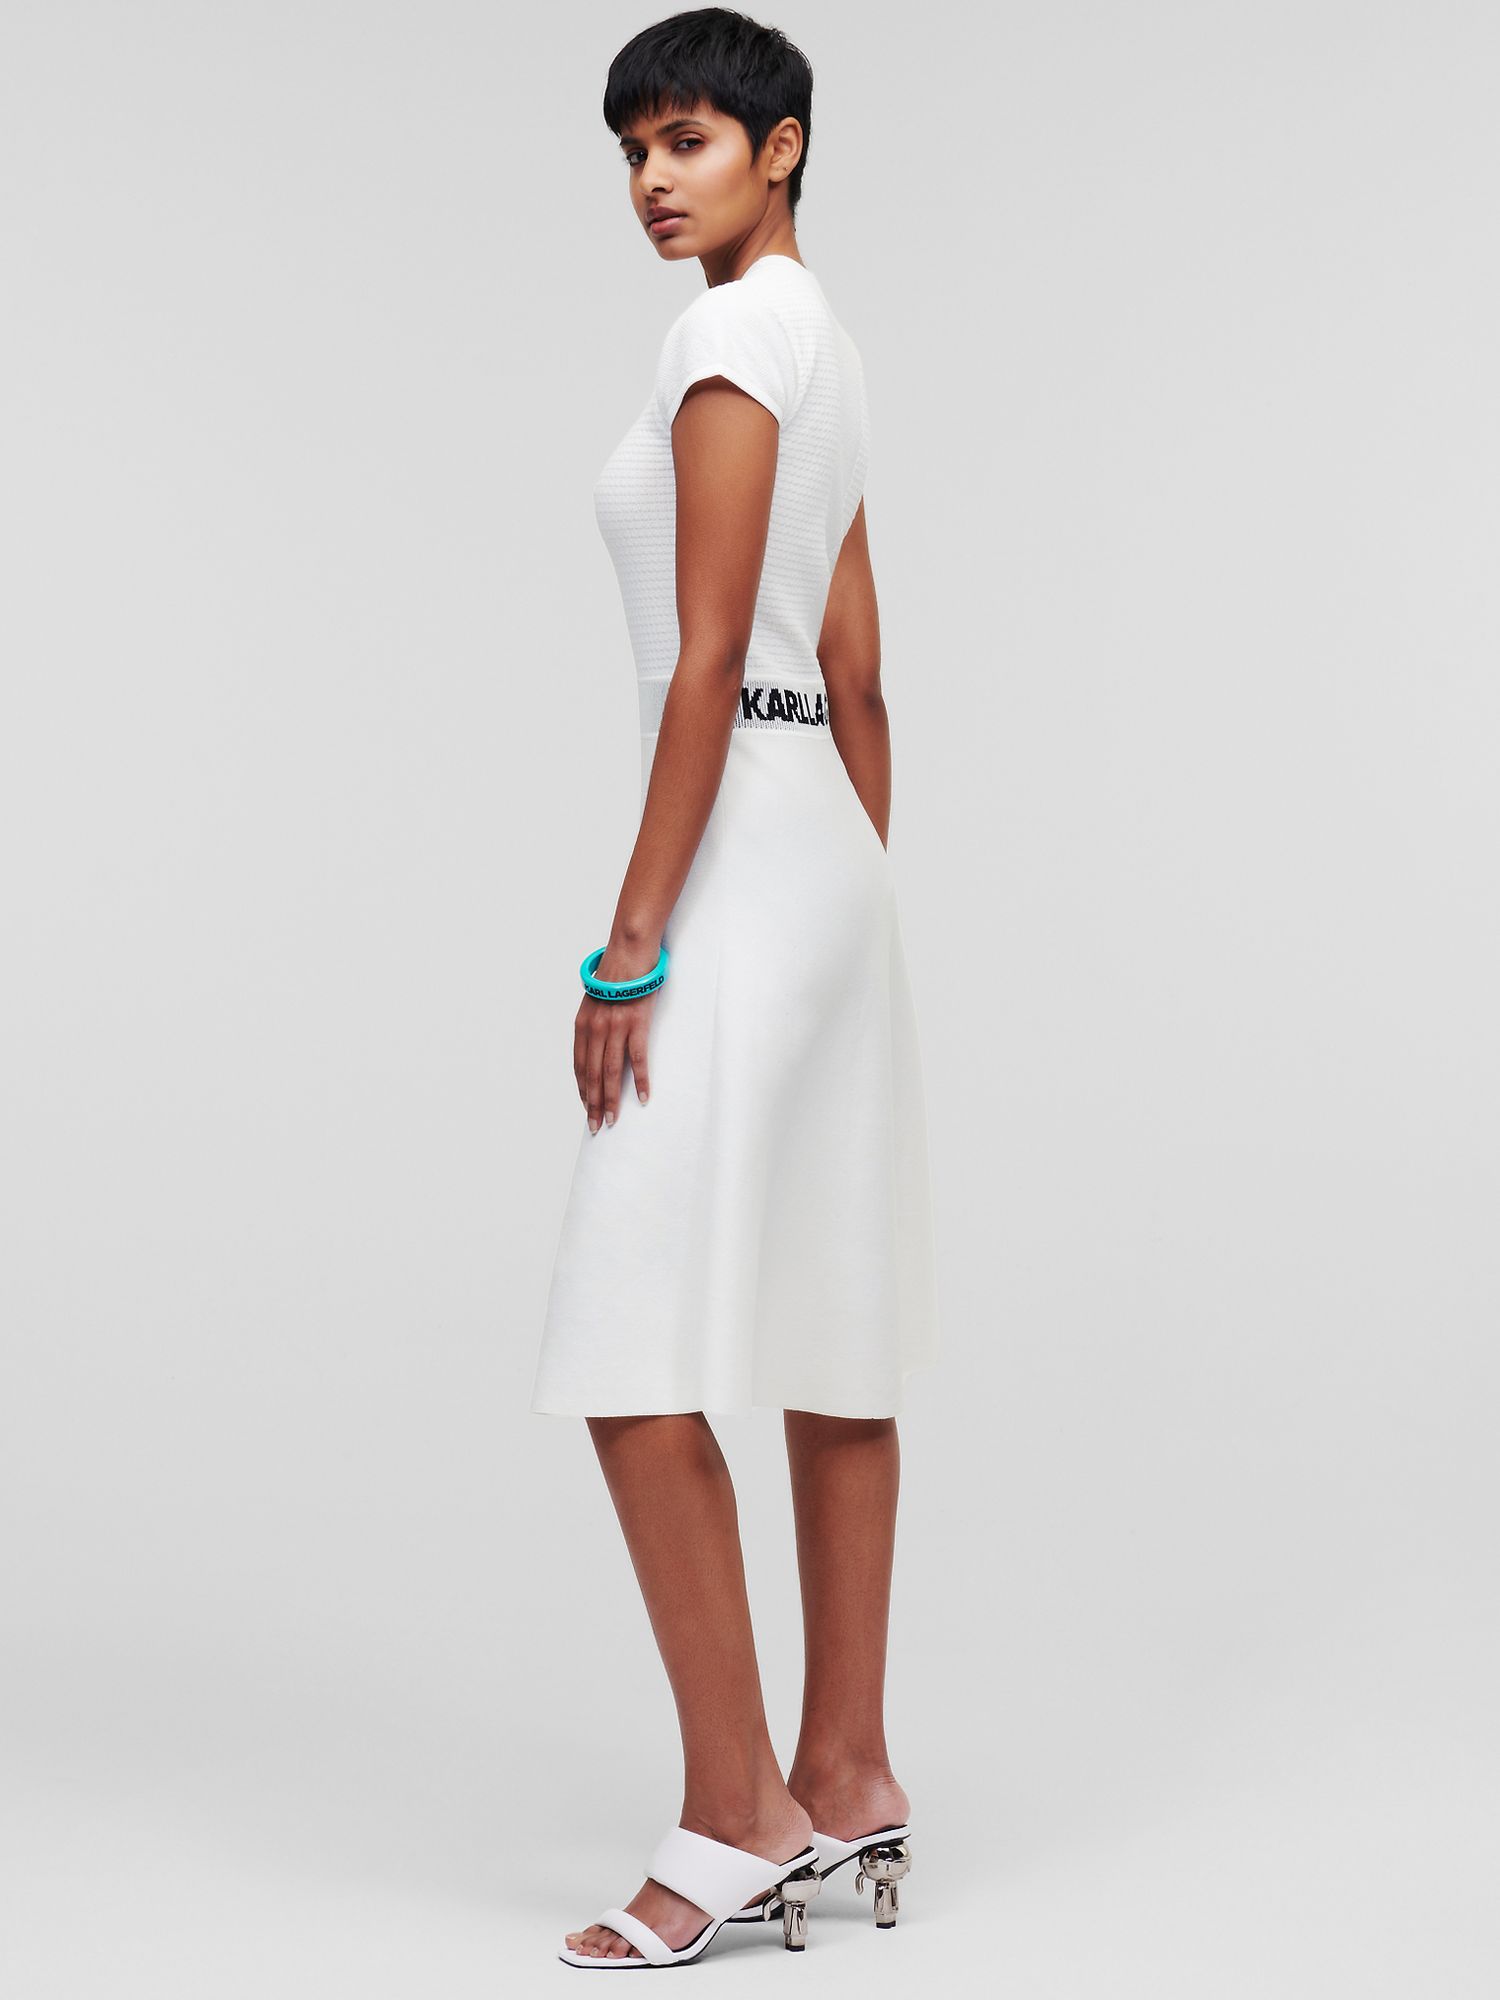 KARL LAGERFELD Knit Dress, White/Black at John Lewis & Partners